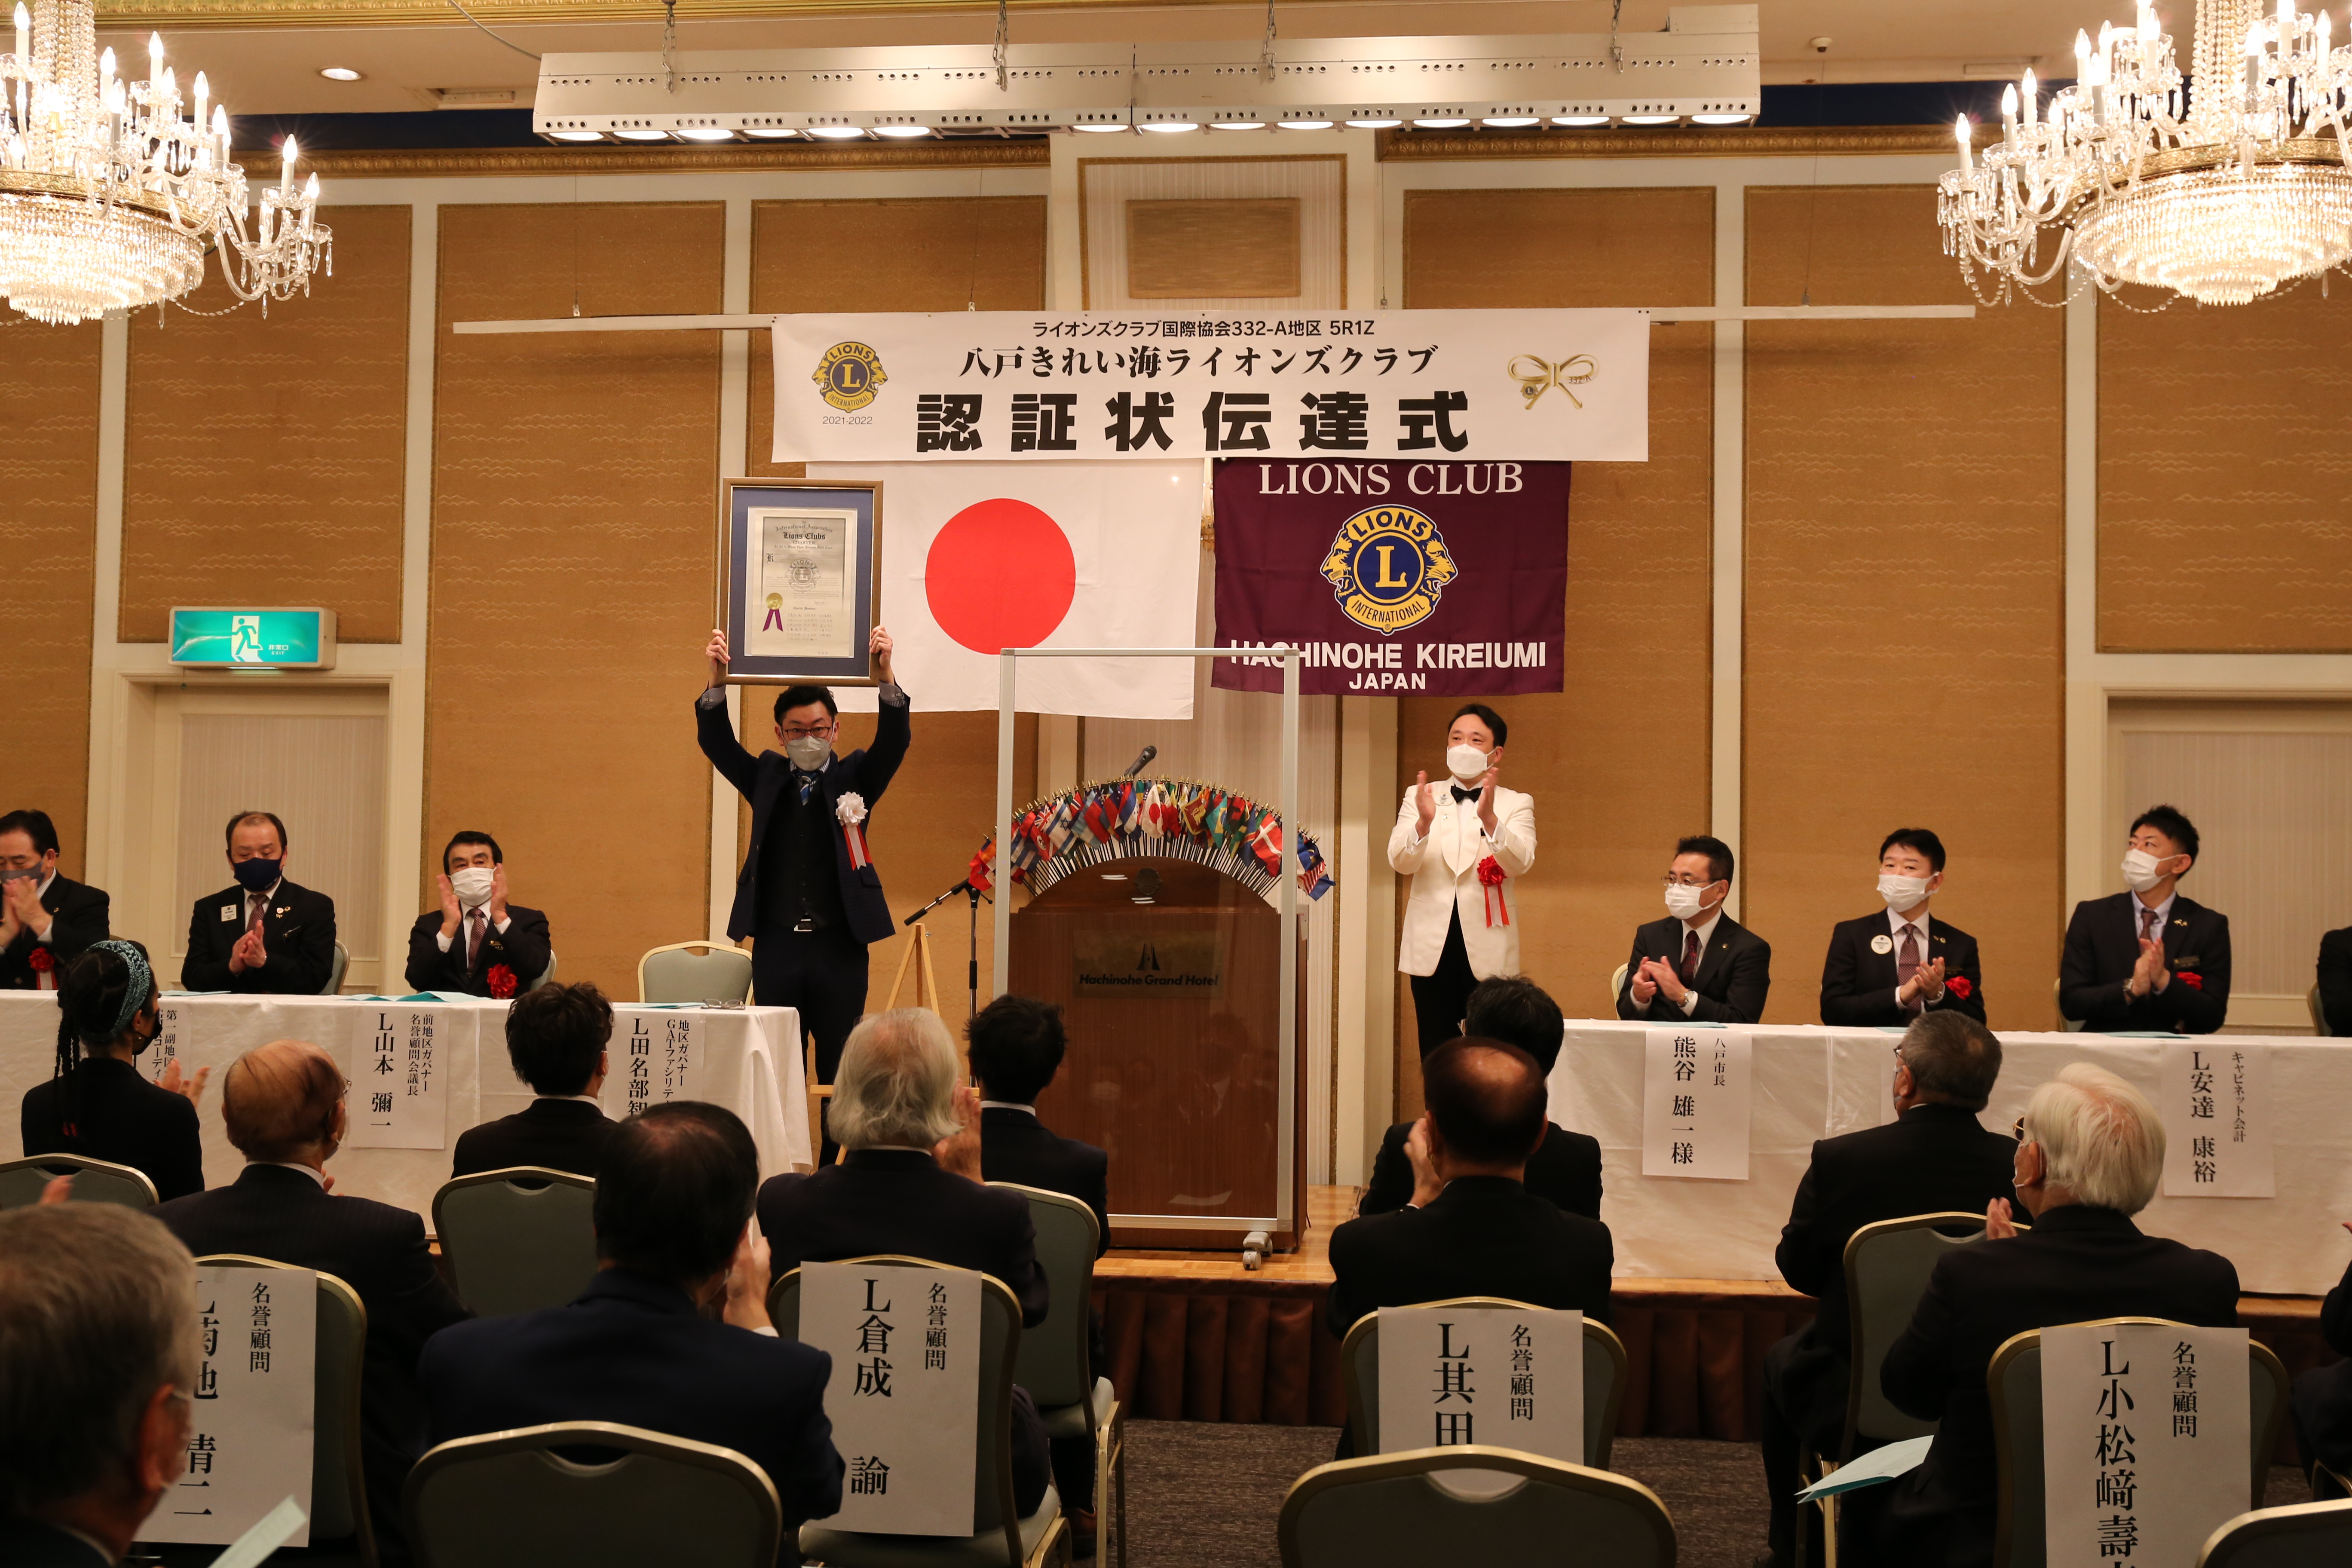 remise de charte au Hachinohe Kireiumi Lions Club